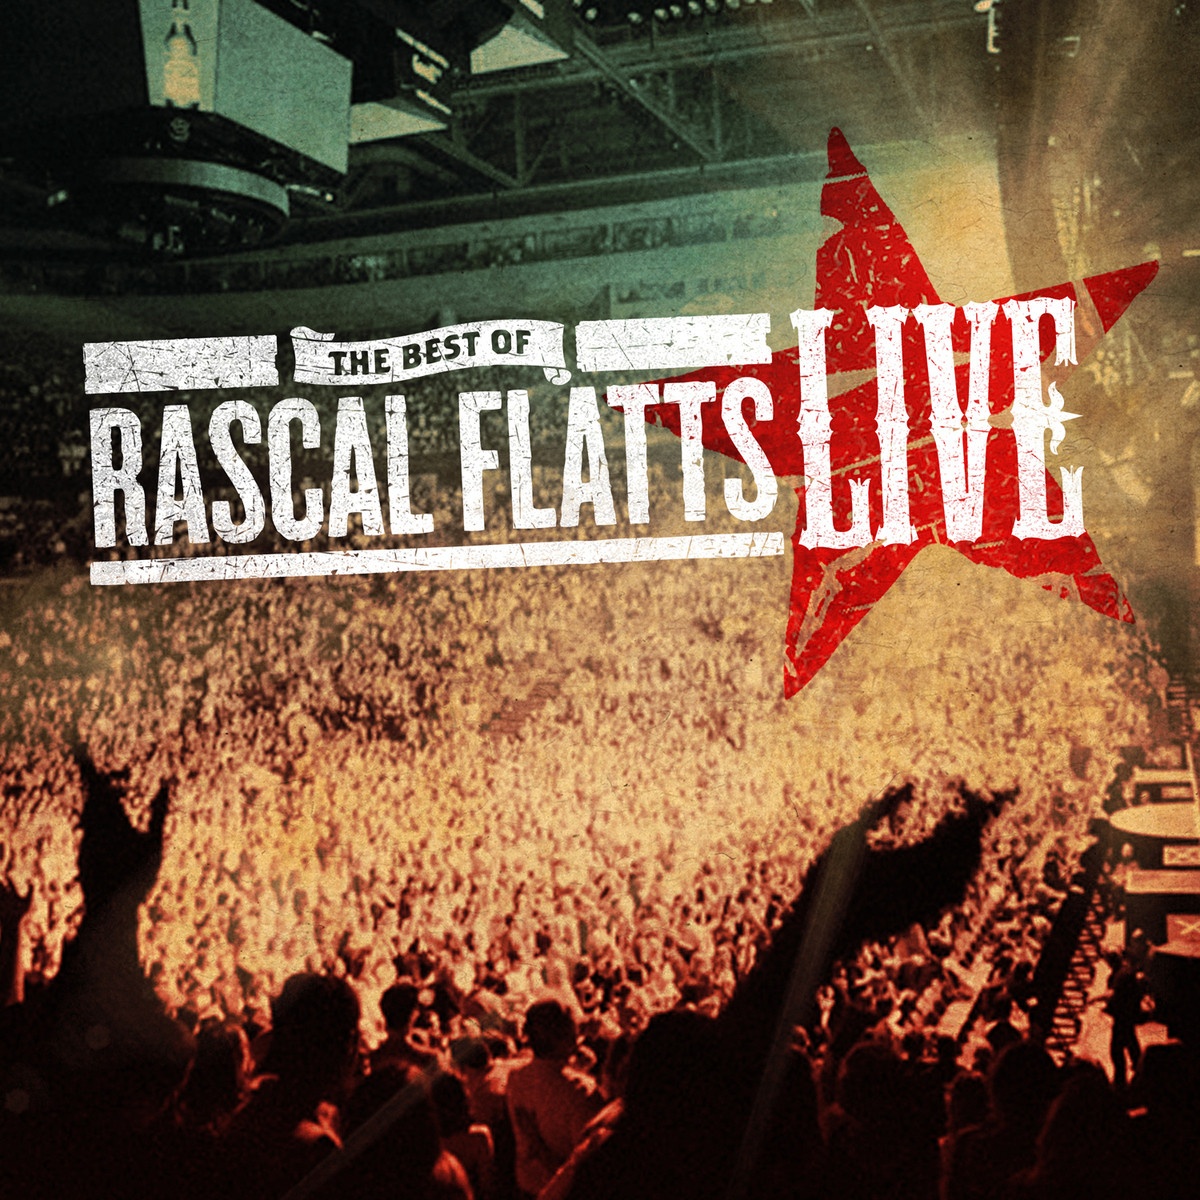 The Best of Rascal Flatts (Live)